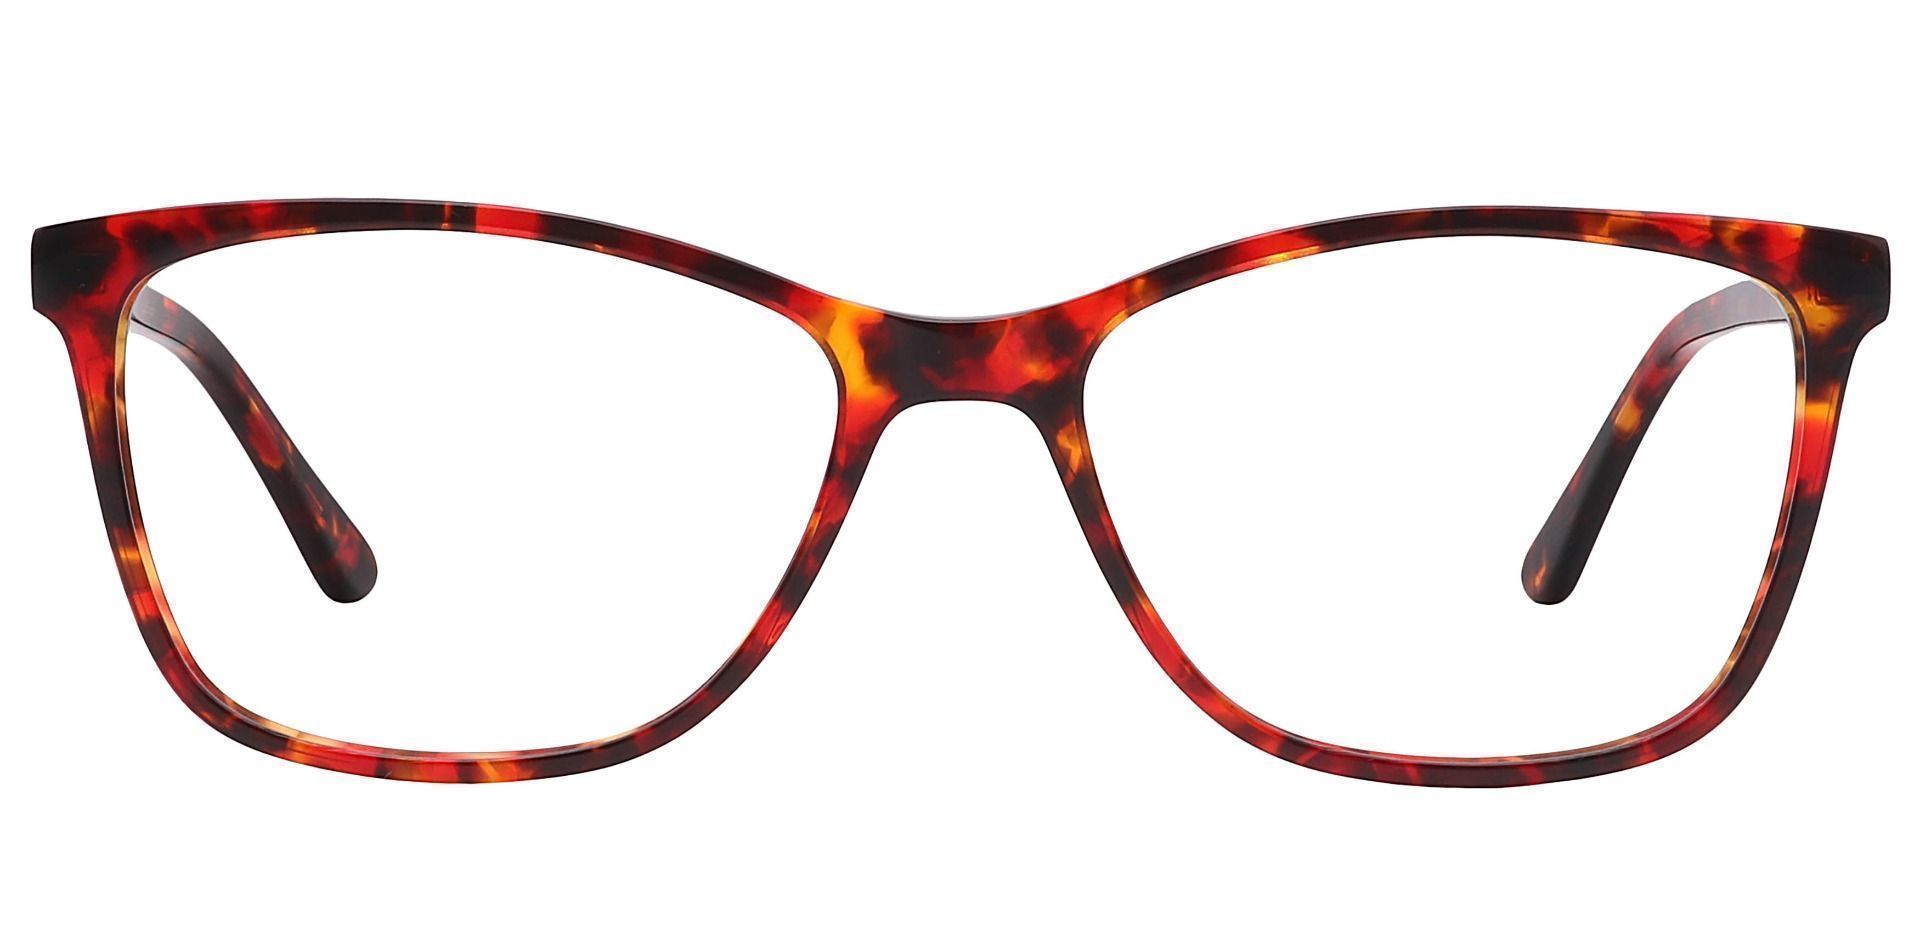 Antonia Square Eyeglasses Frame - Red